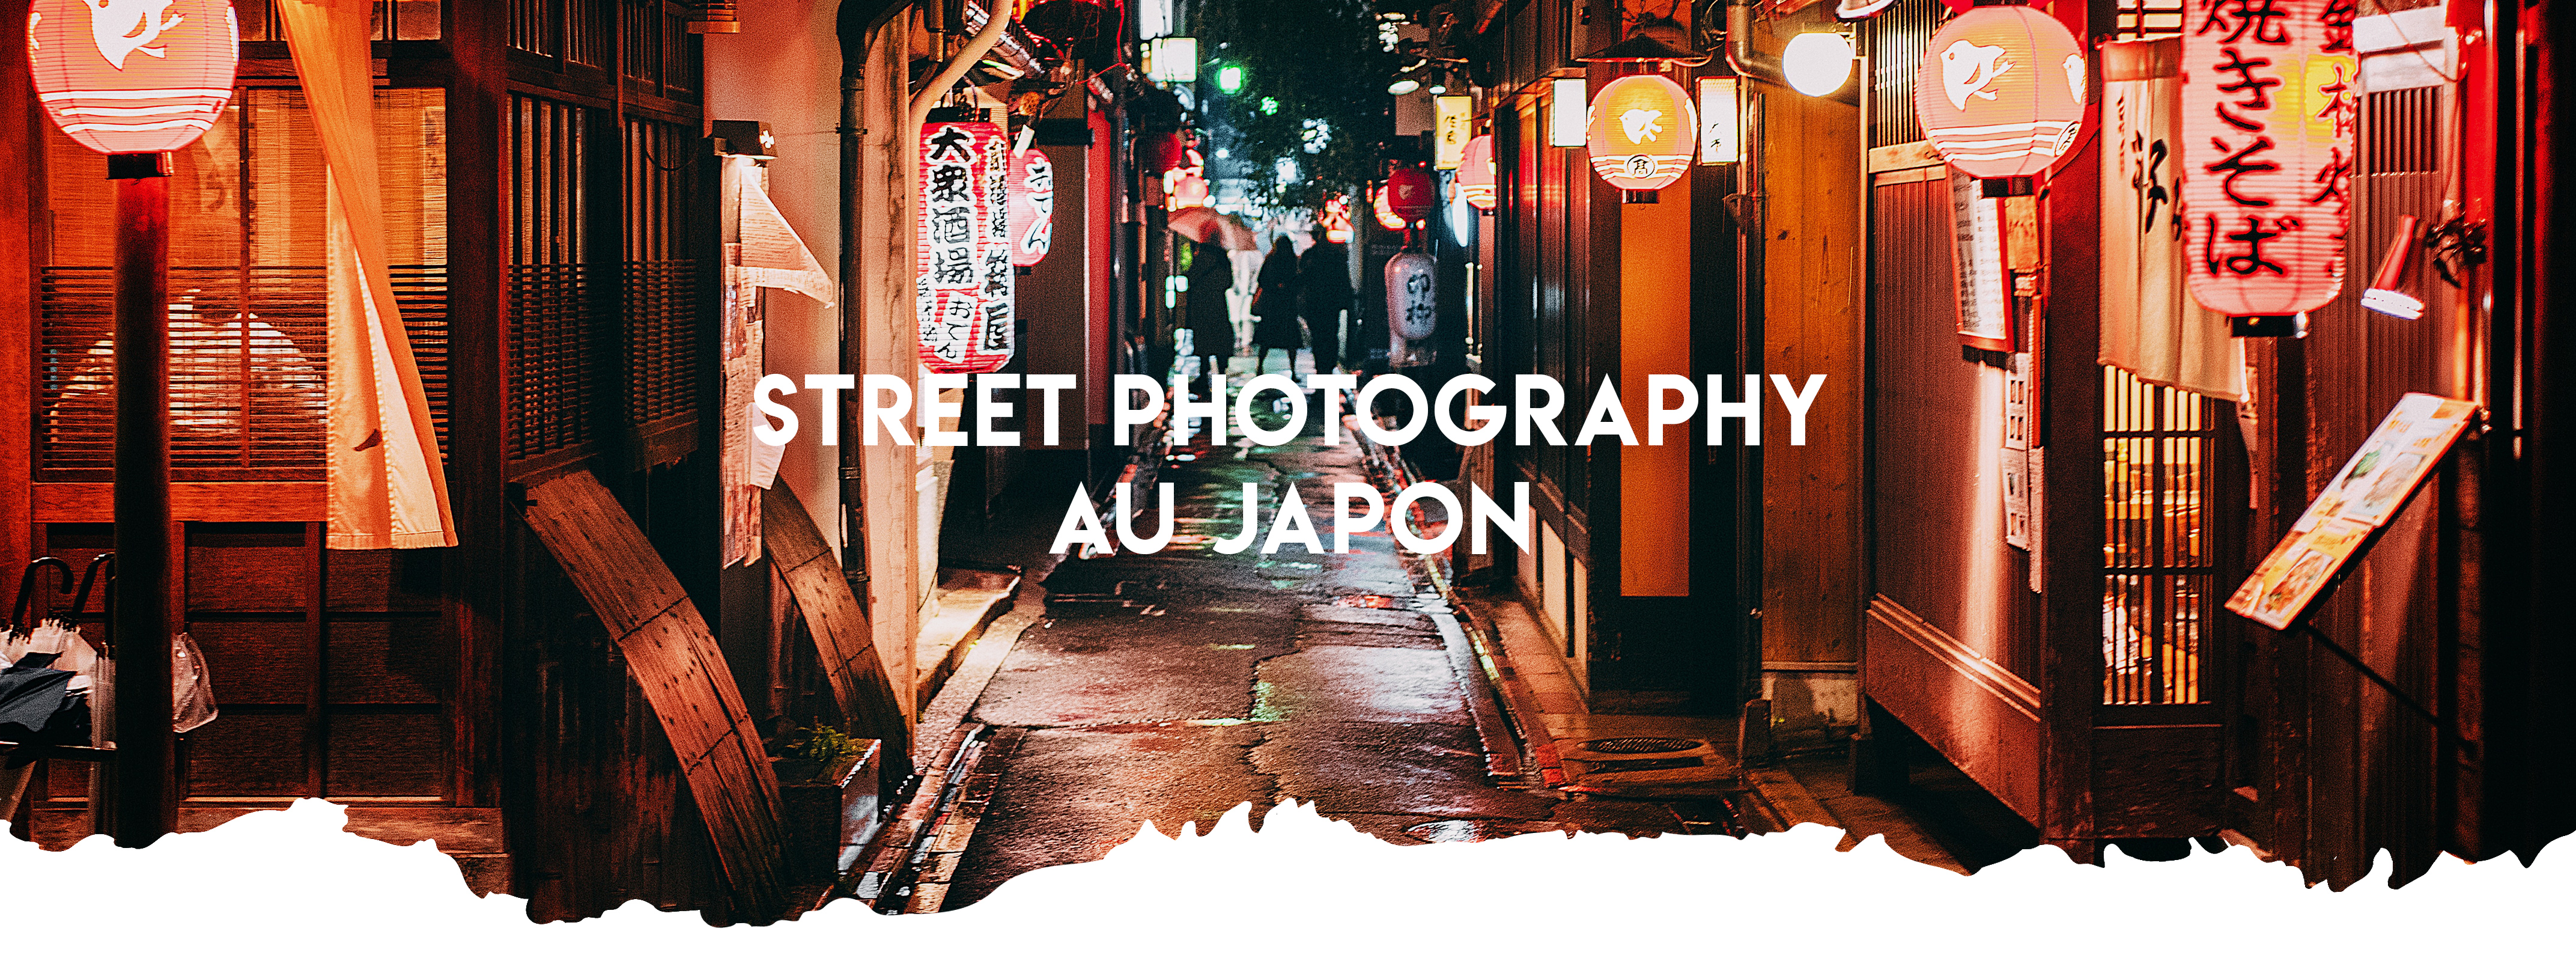 Street photography au Japon